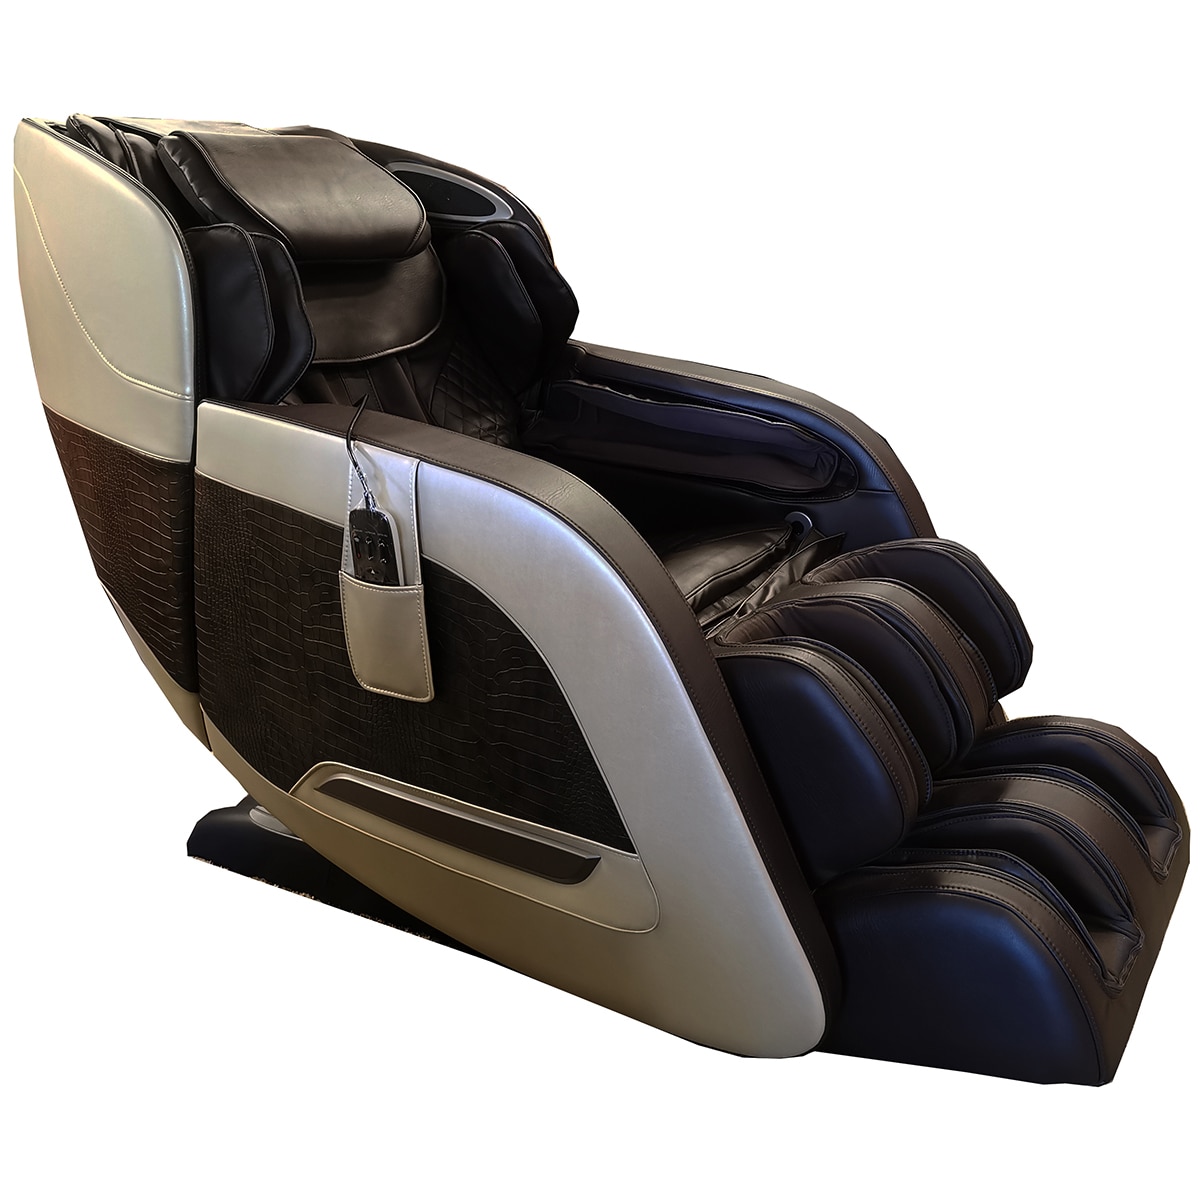 Iyume 6602 Massage Chair - Brown